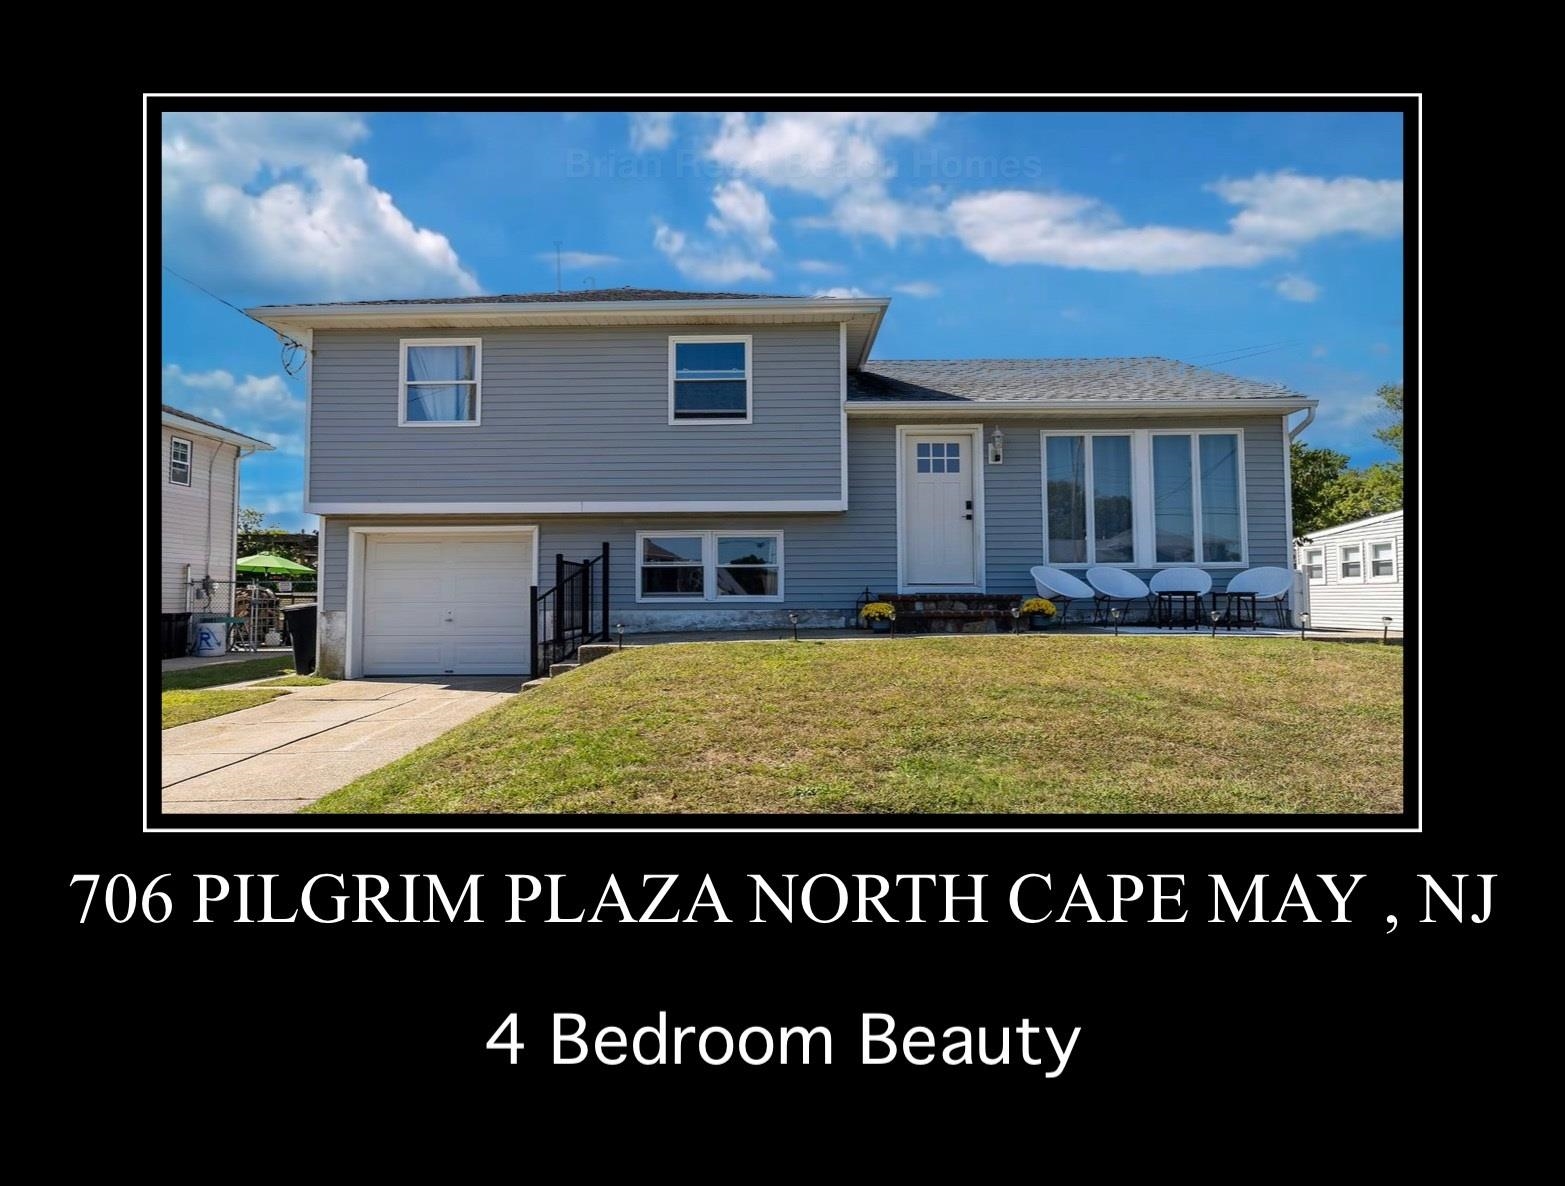 706 Pilgrim Plaza - North Cape May